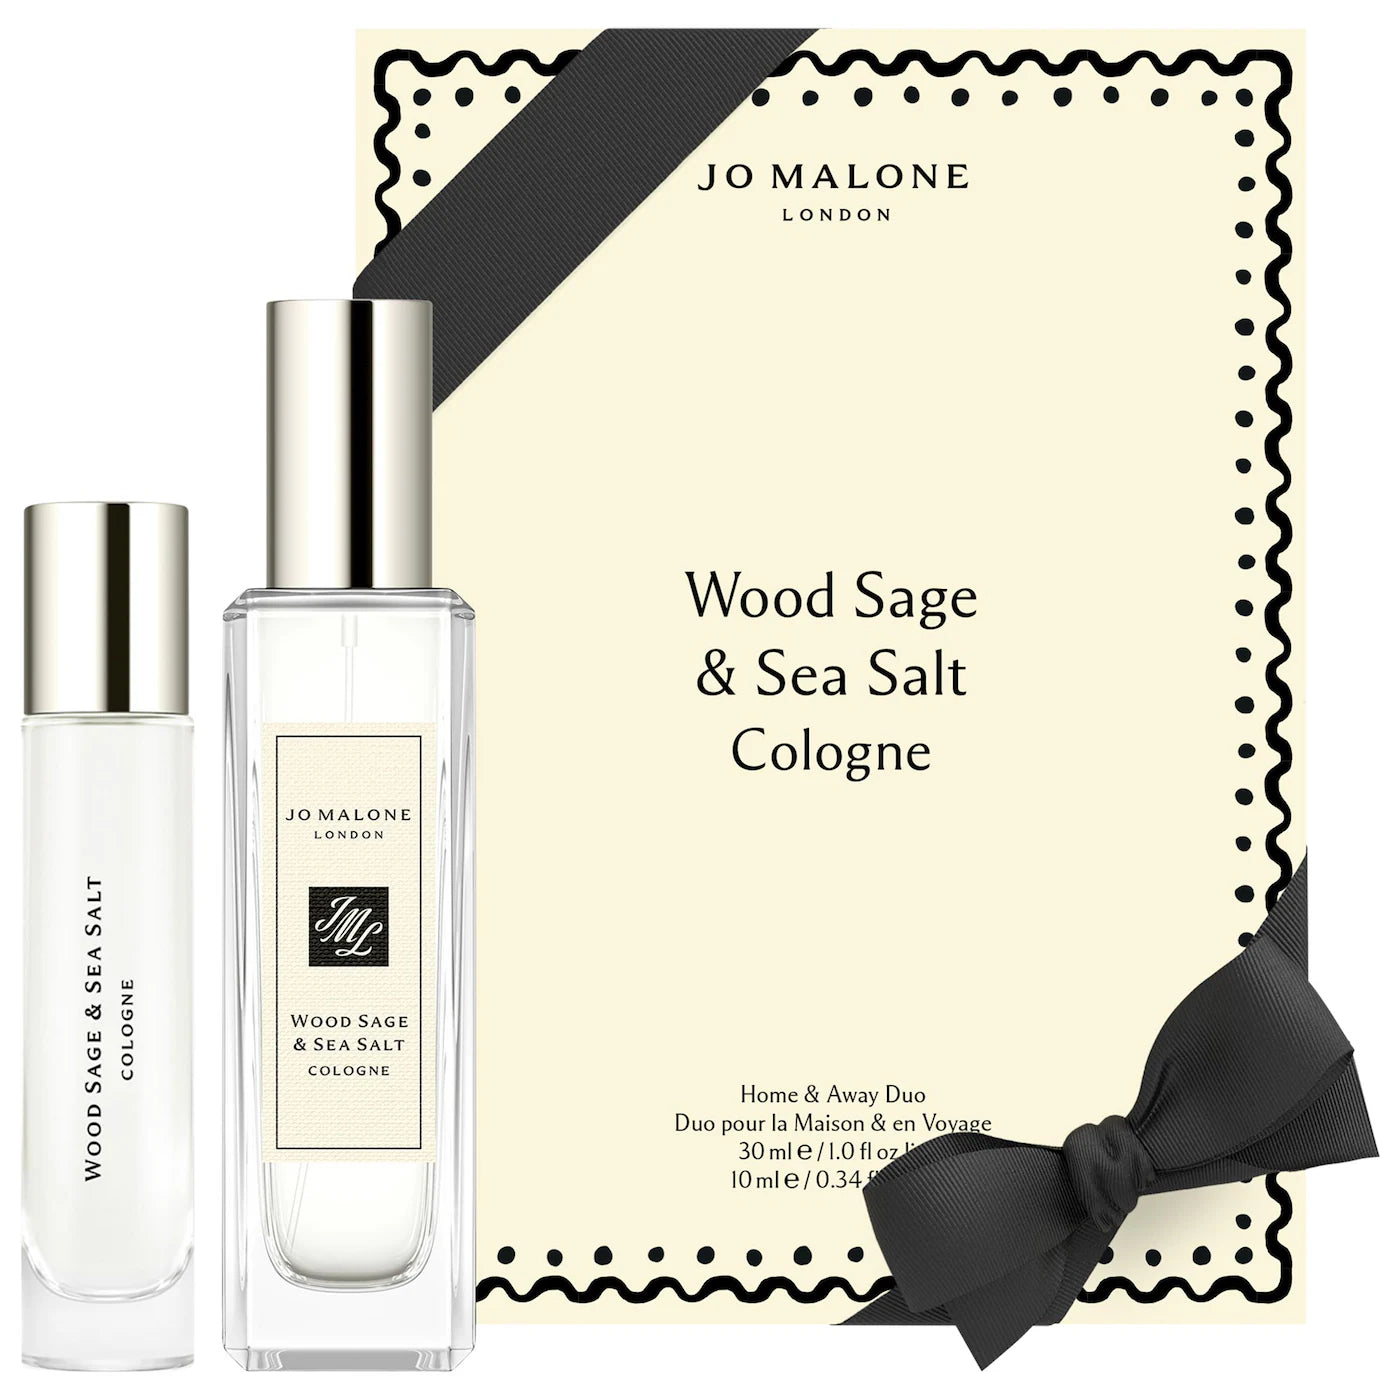 Jo Malone London Wood Sage & Sea Salt Gift Set